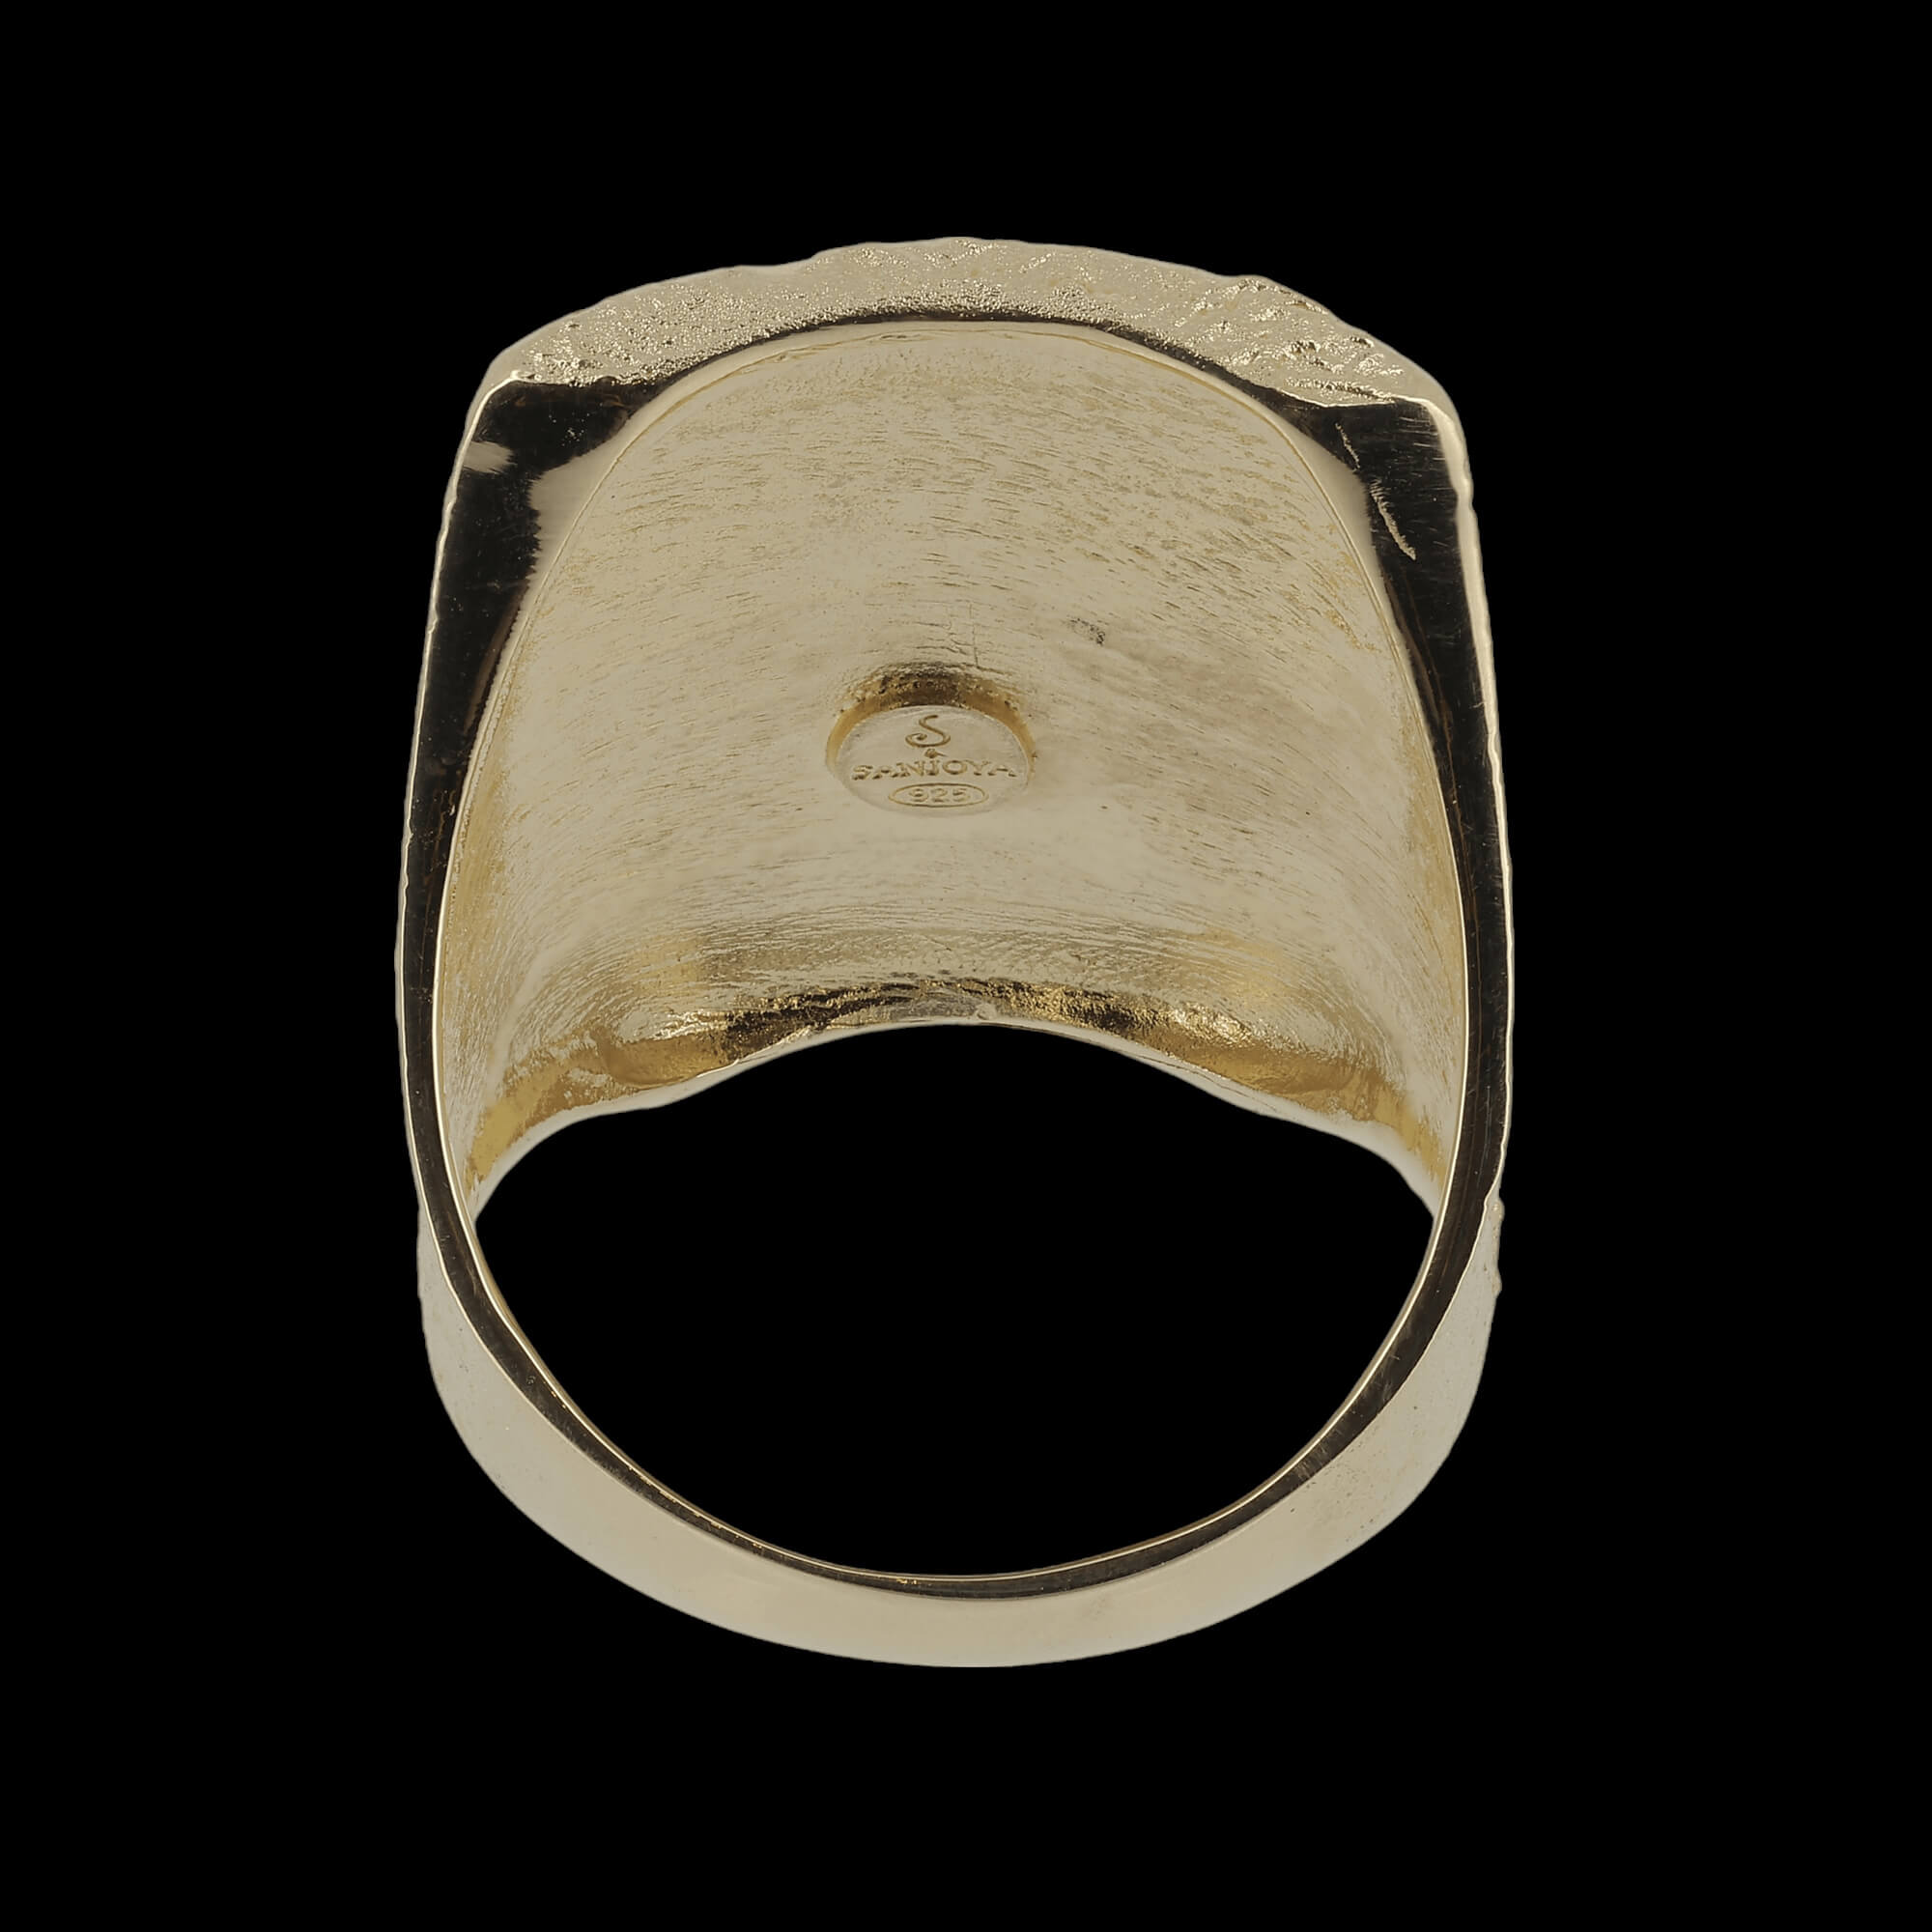 Large and gilded beautiful rectangular ring